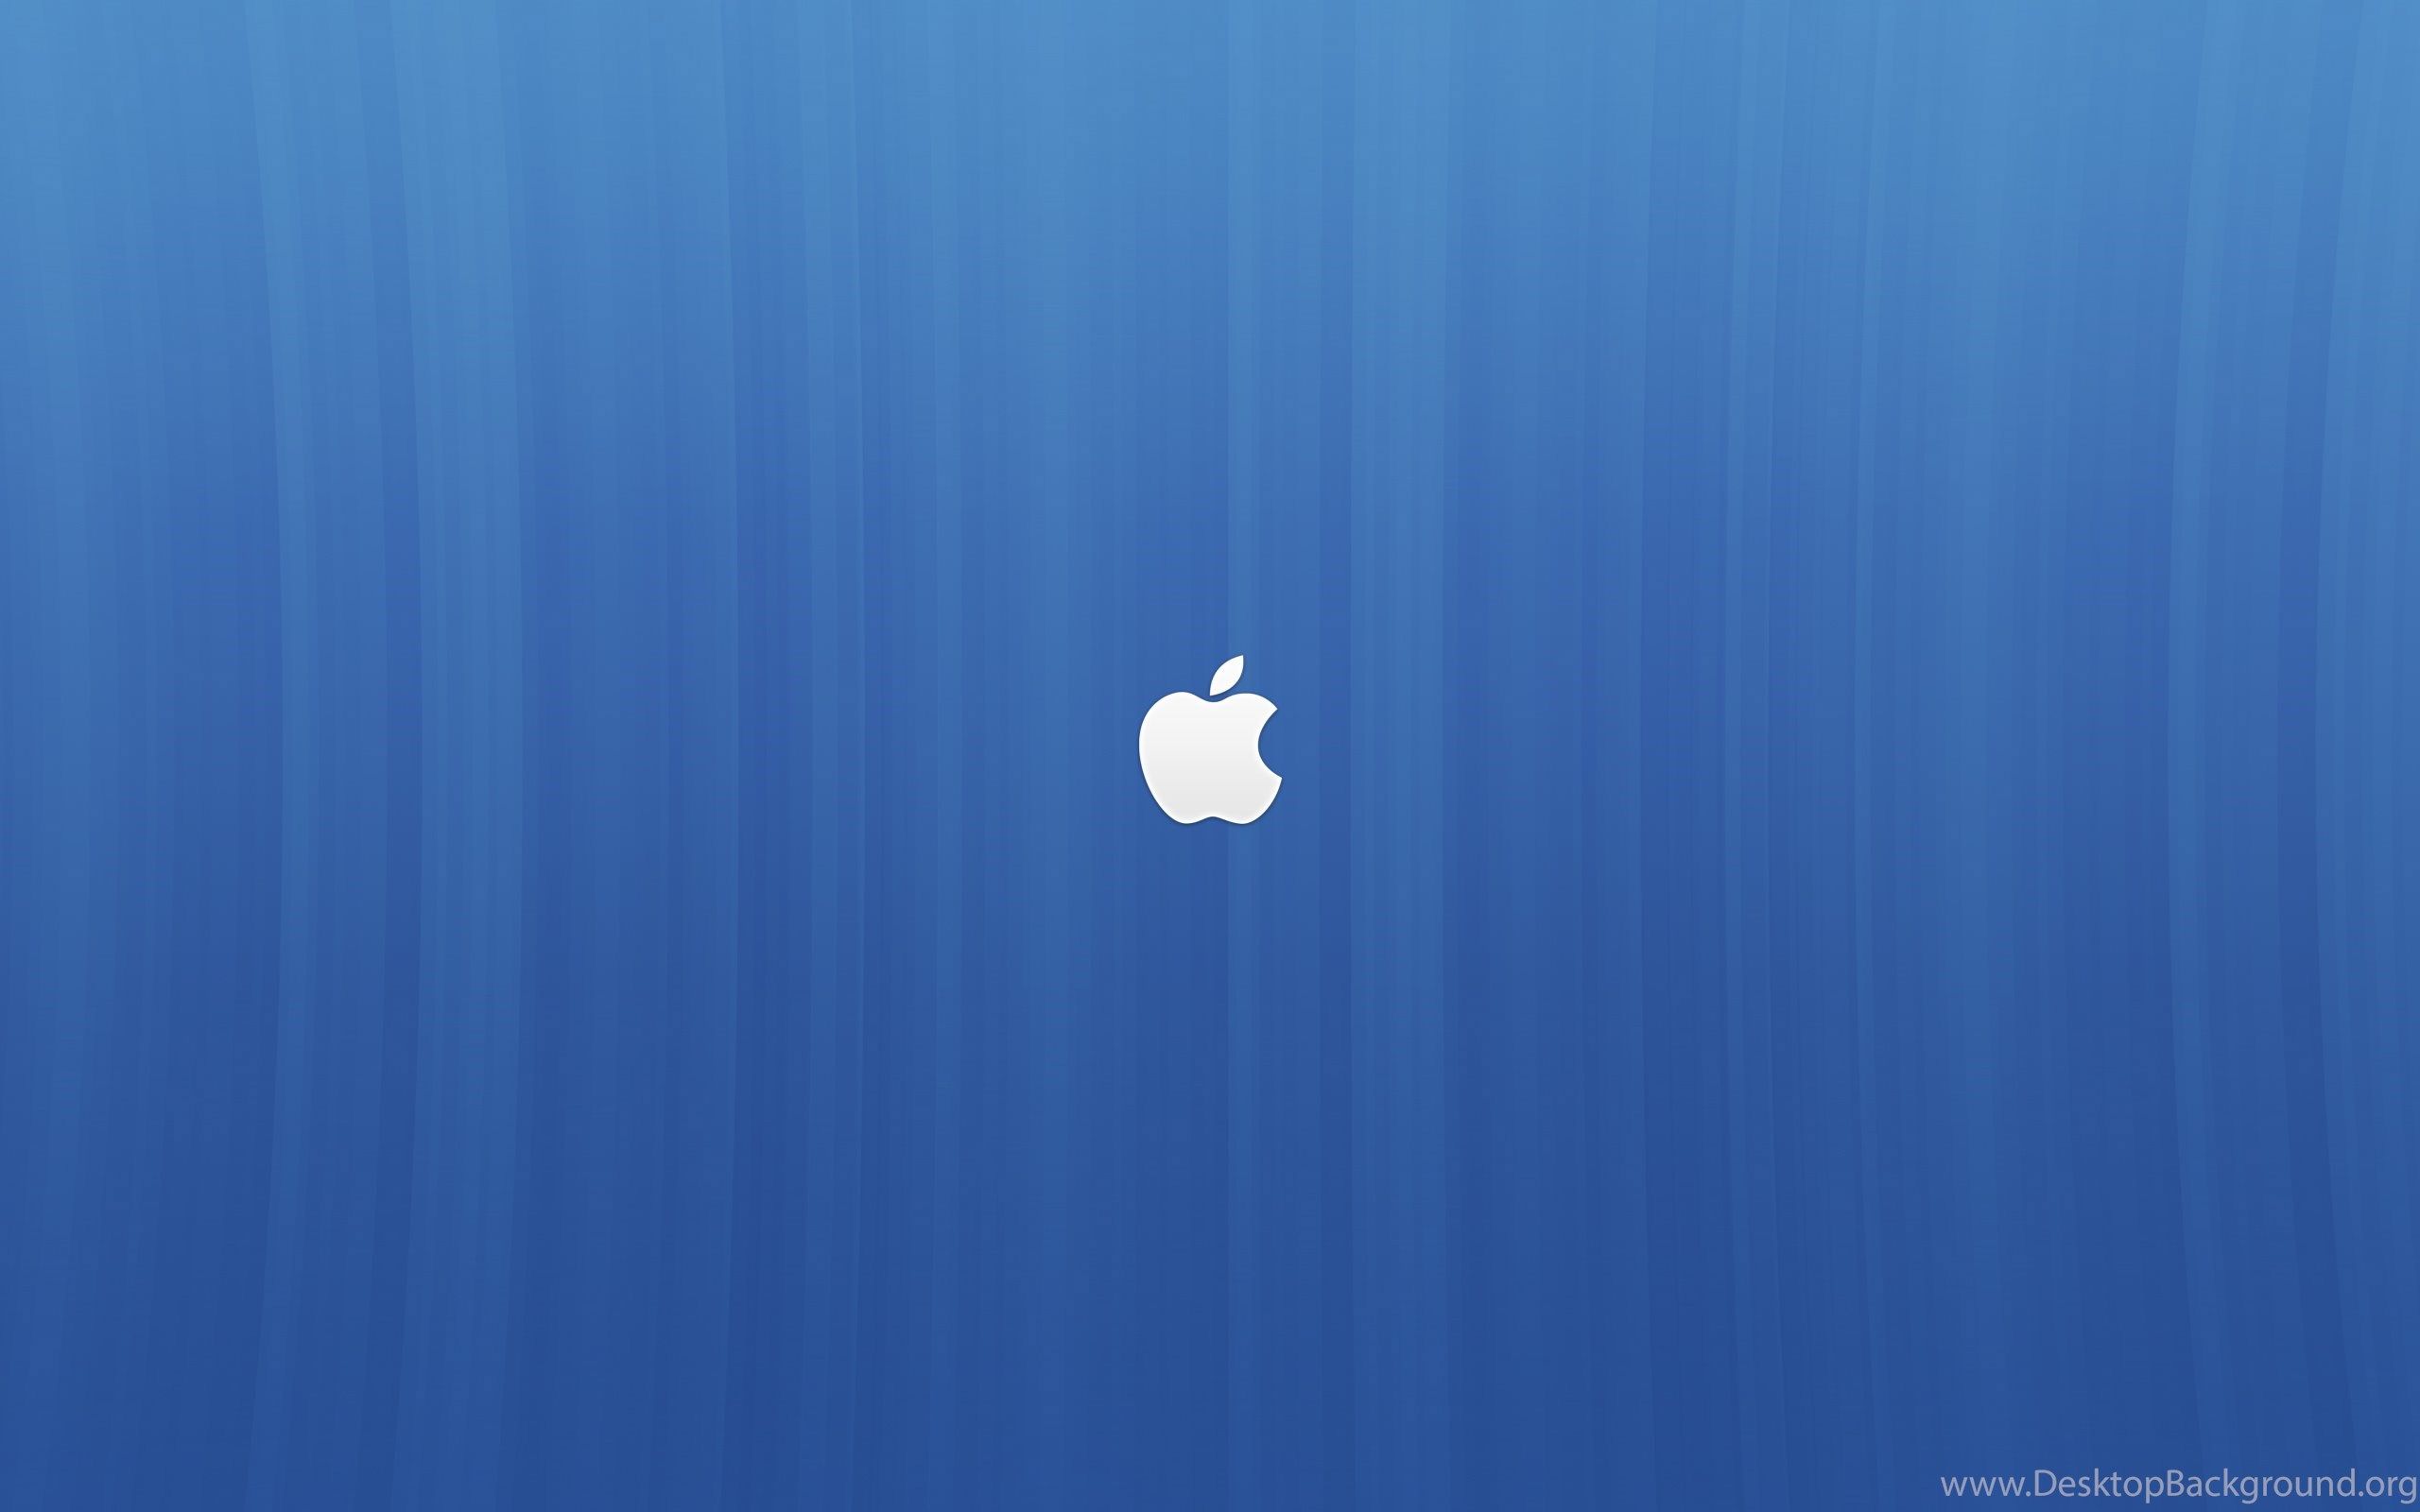 Small Apple Logo Blue Background Wallpaper Desktop Background